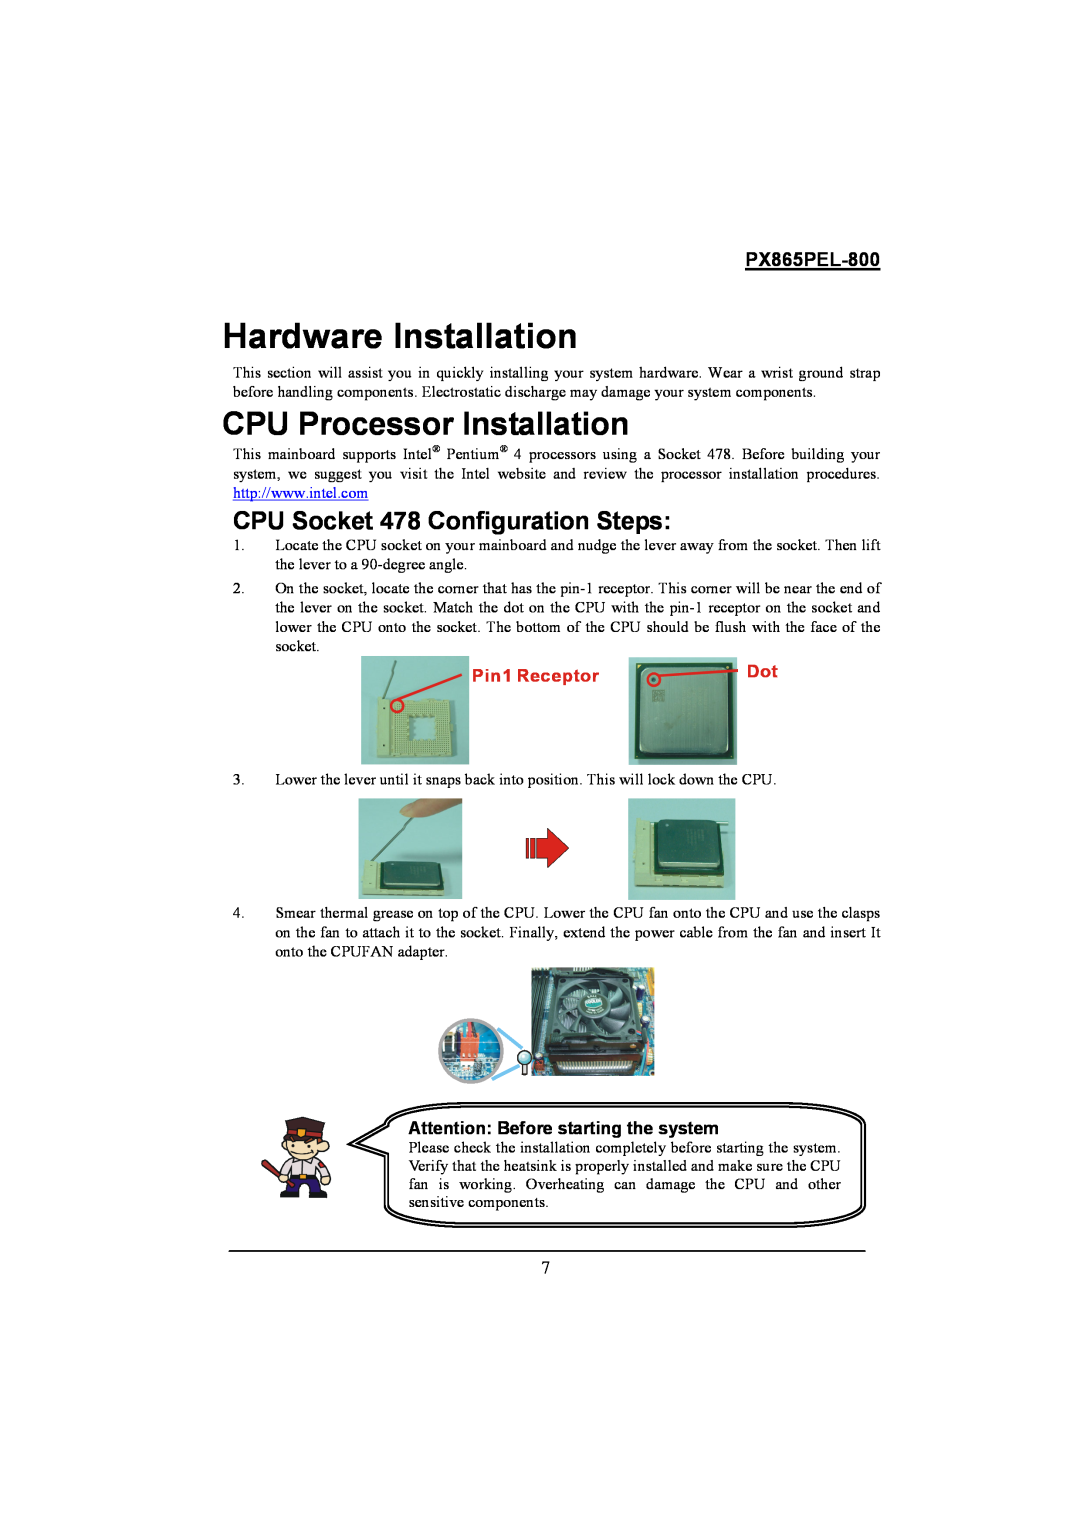 Intel PX865PEL-800 Hardware Installation, CPU Processor Installation, CPU Socket 478 Configuration Steps, Pin1 Receptor 